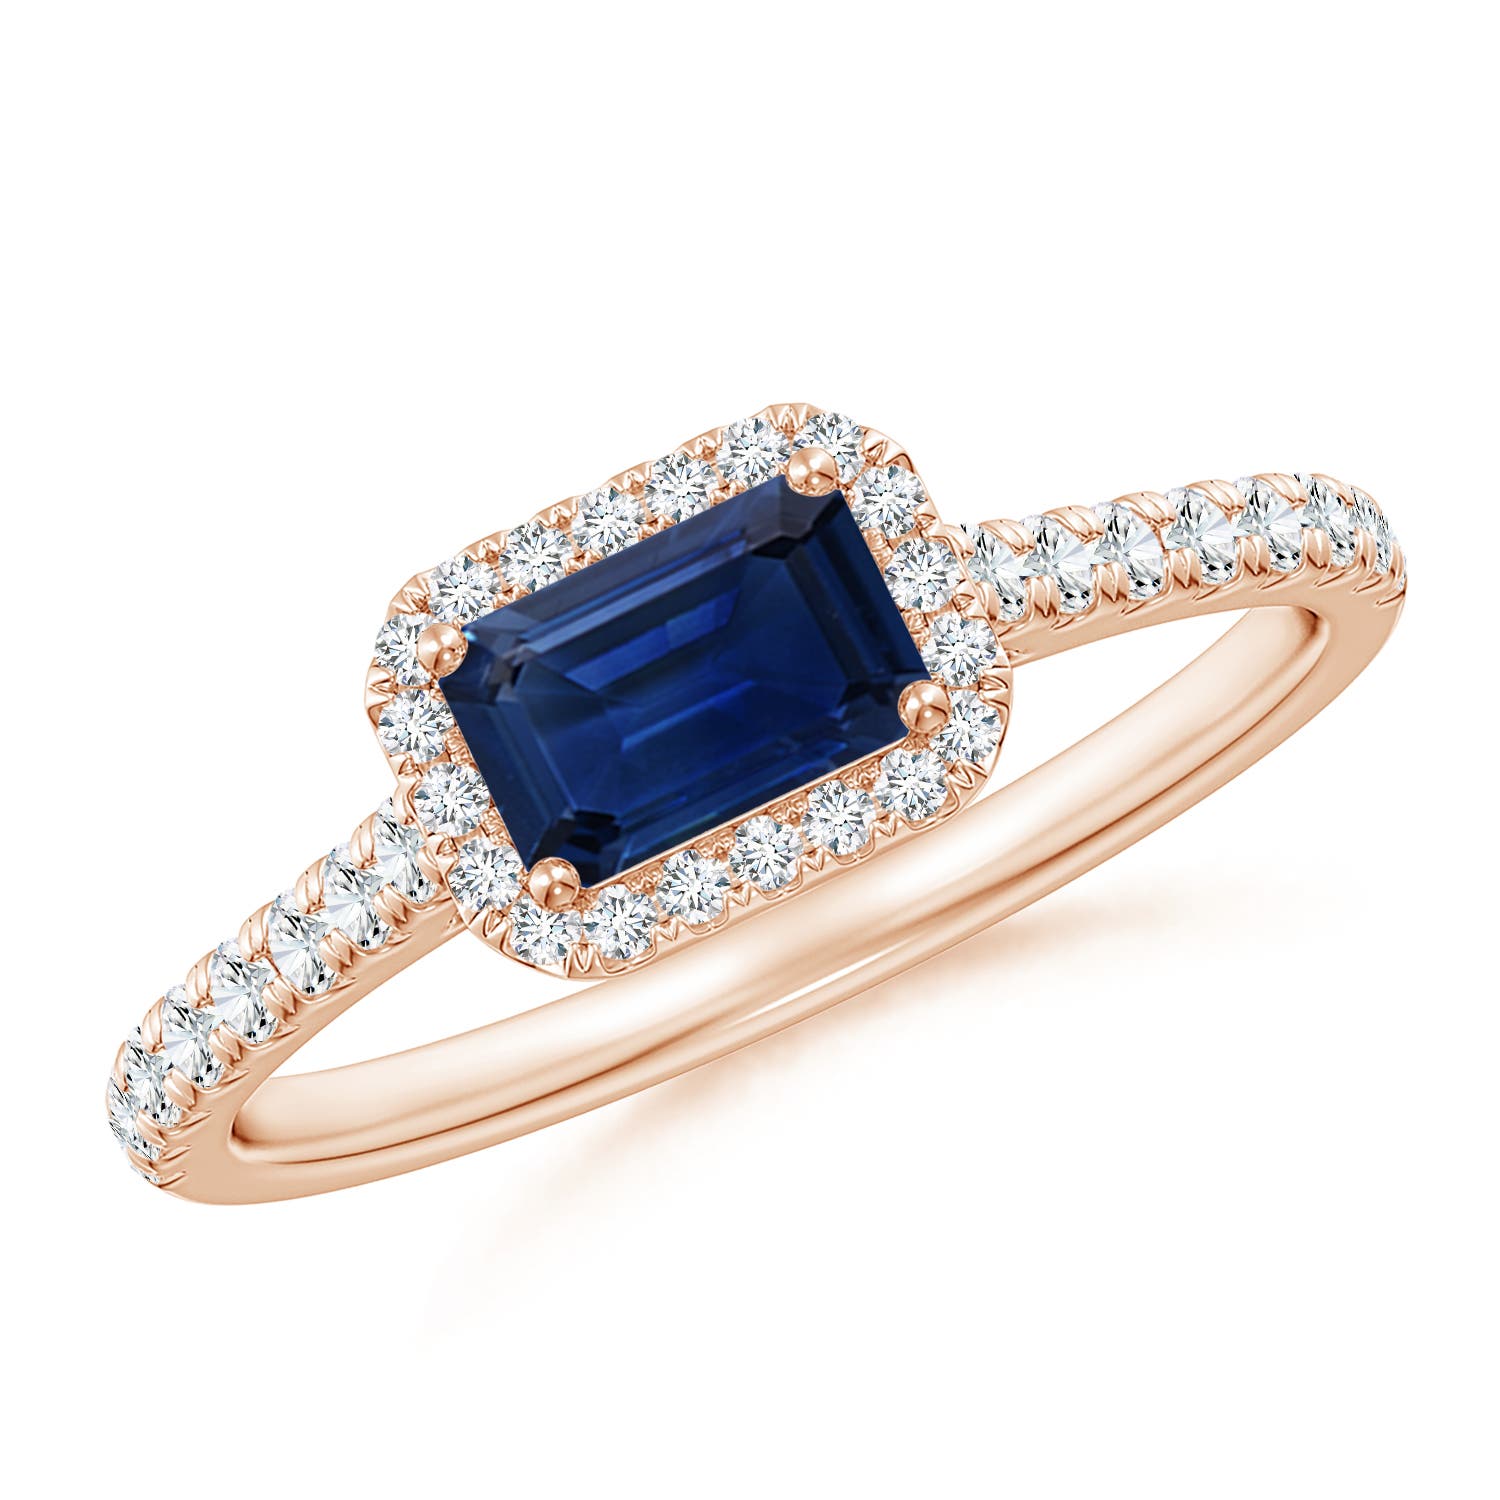 East West Emerald-Cut Sapphire Halo Ring | Angara